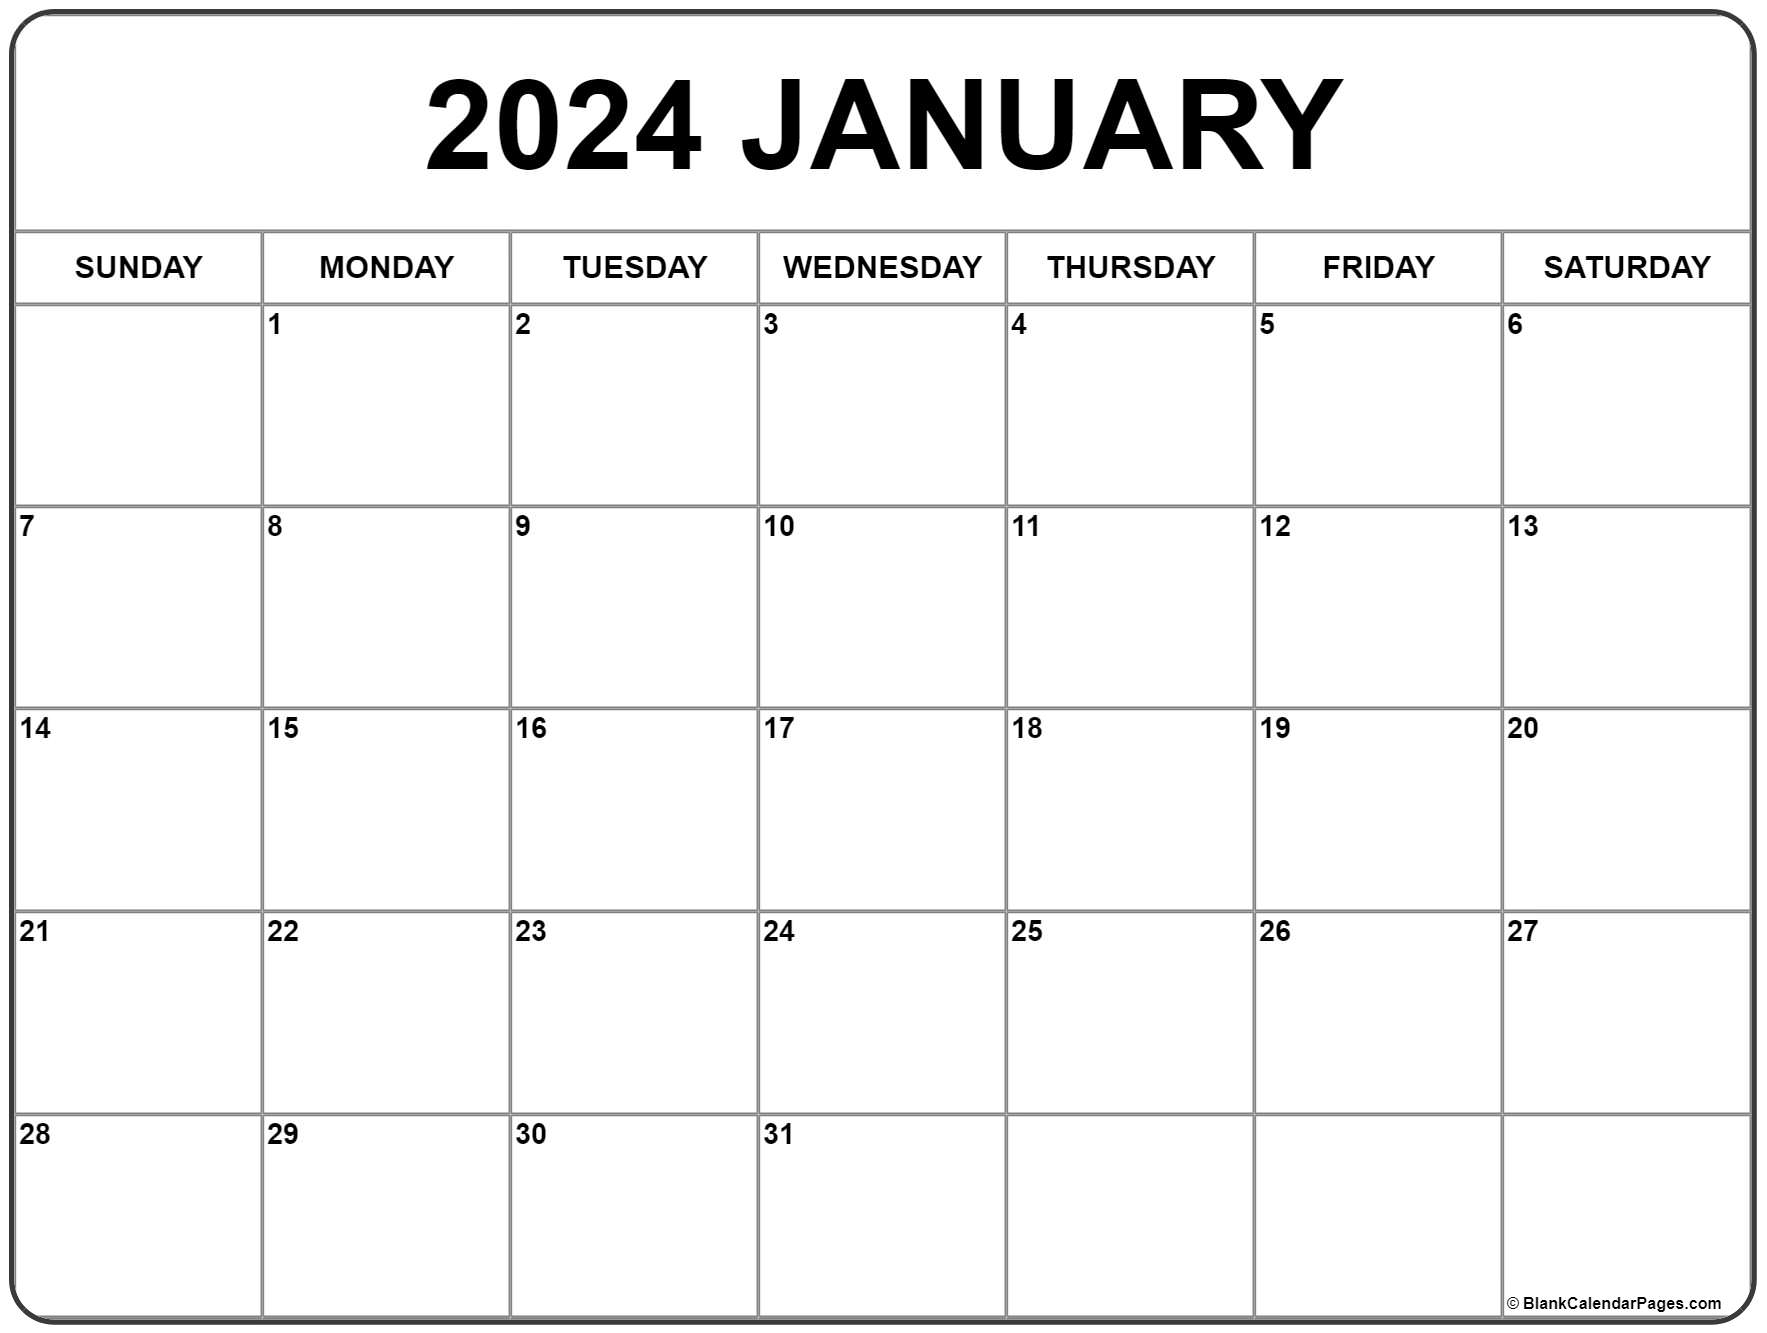 Calendar Jan 2021 January 2021 calendar | free printable monthly calendars